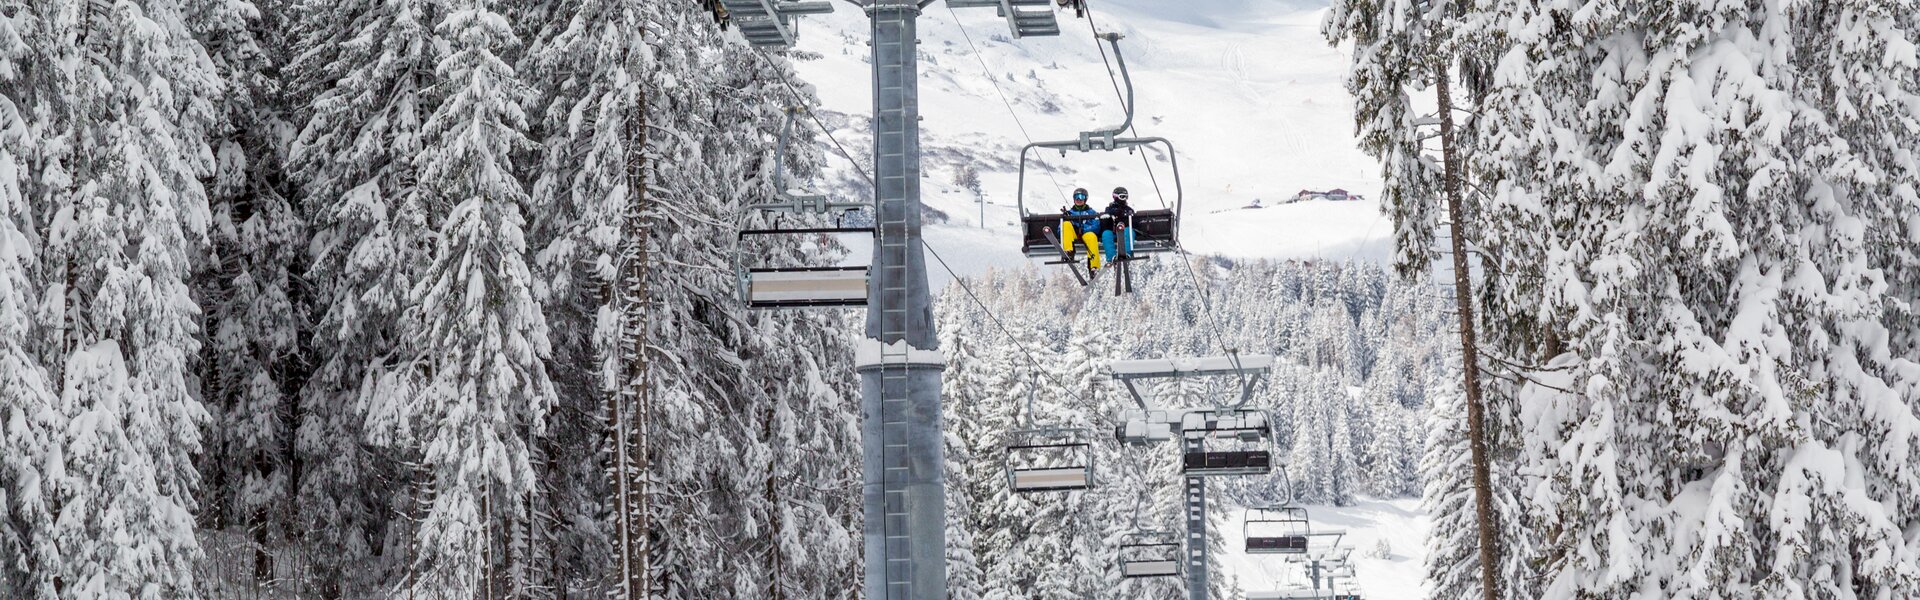 lift ski resort Arosa Lenzerheide | © Ferienregion Lenzerheide / Johannes Fredheim